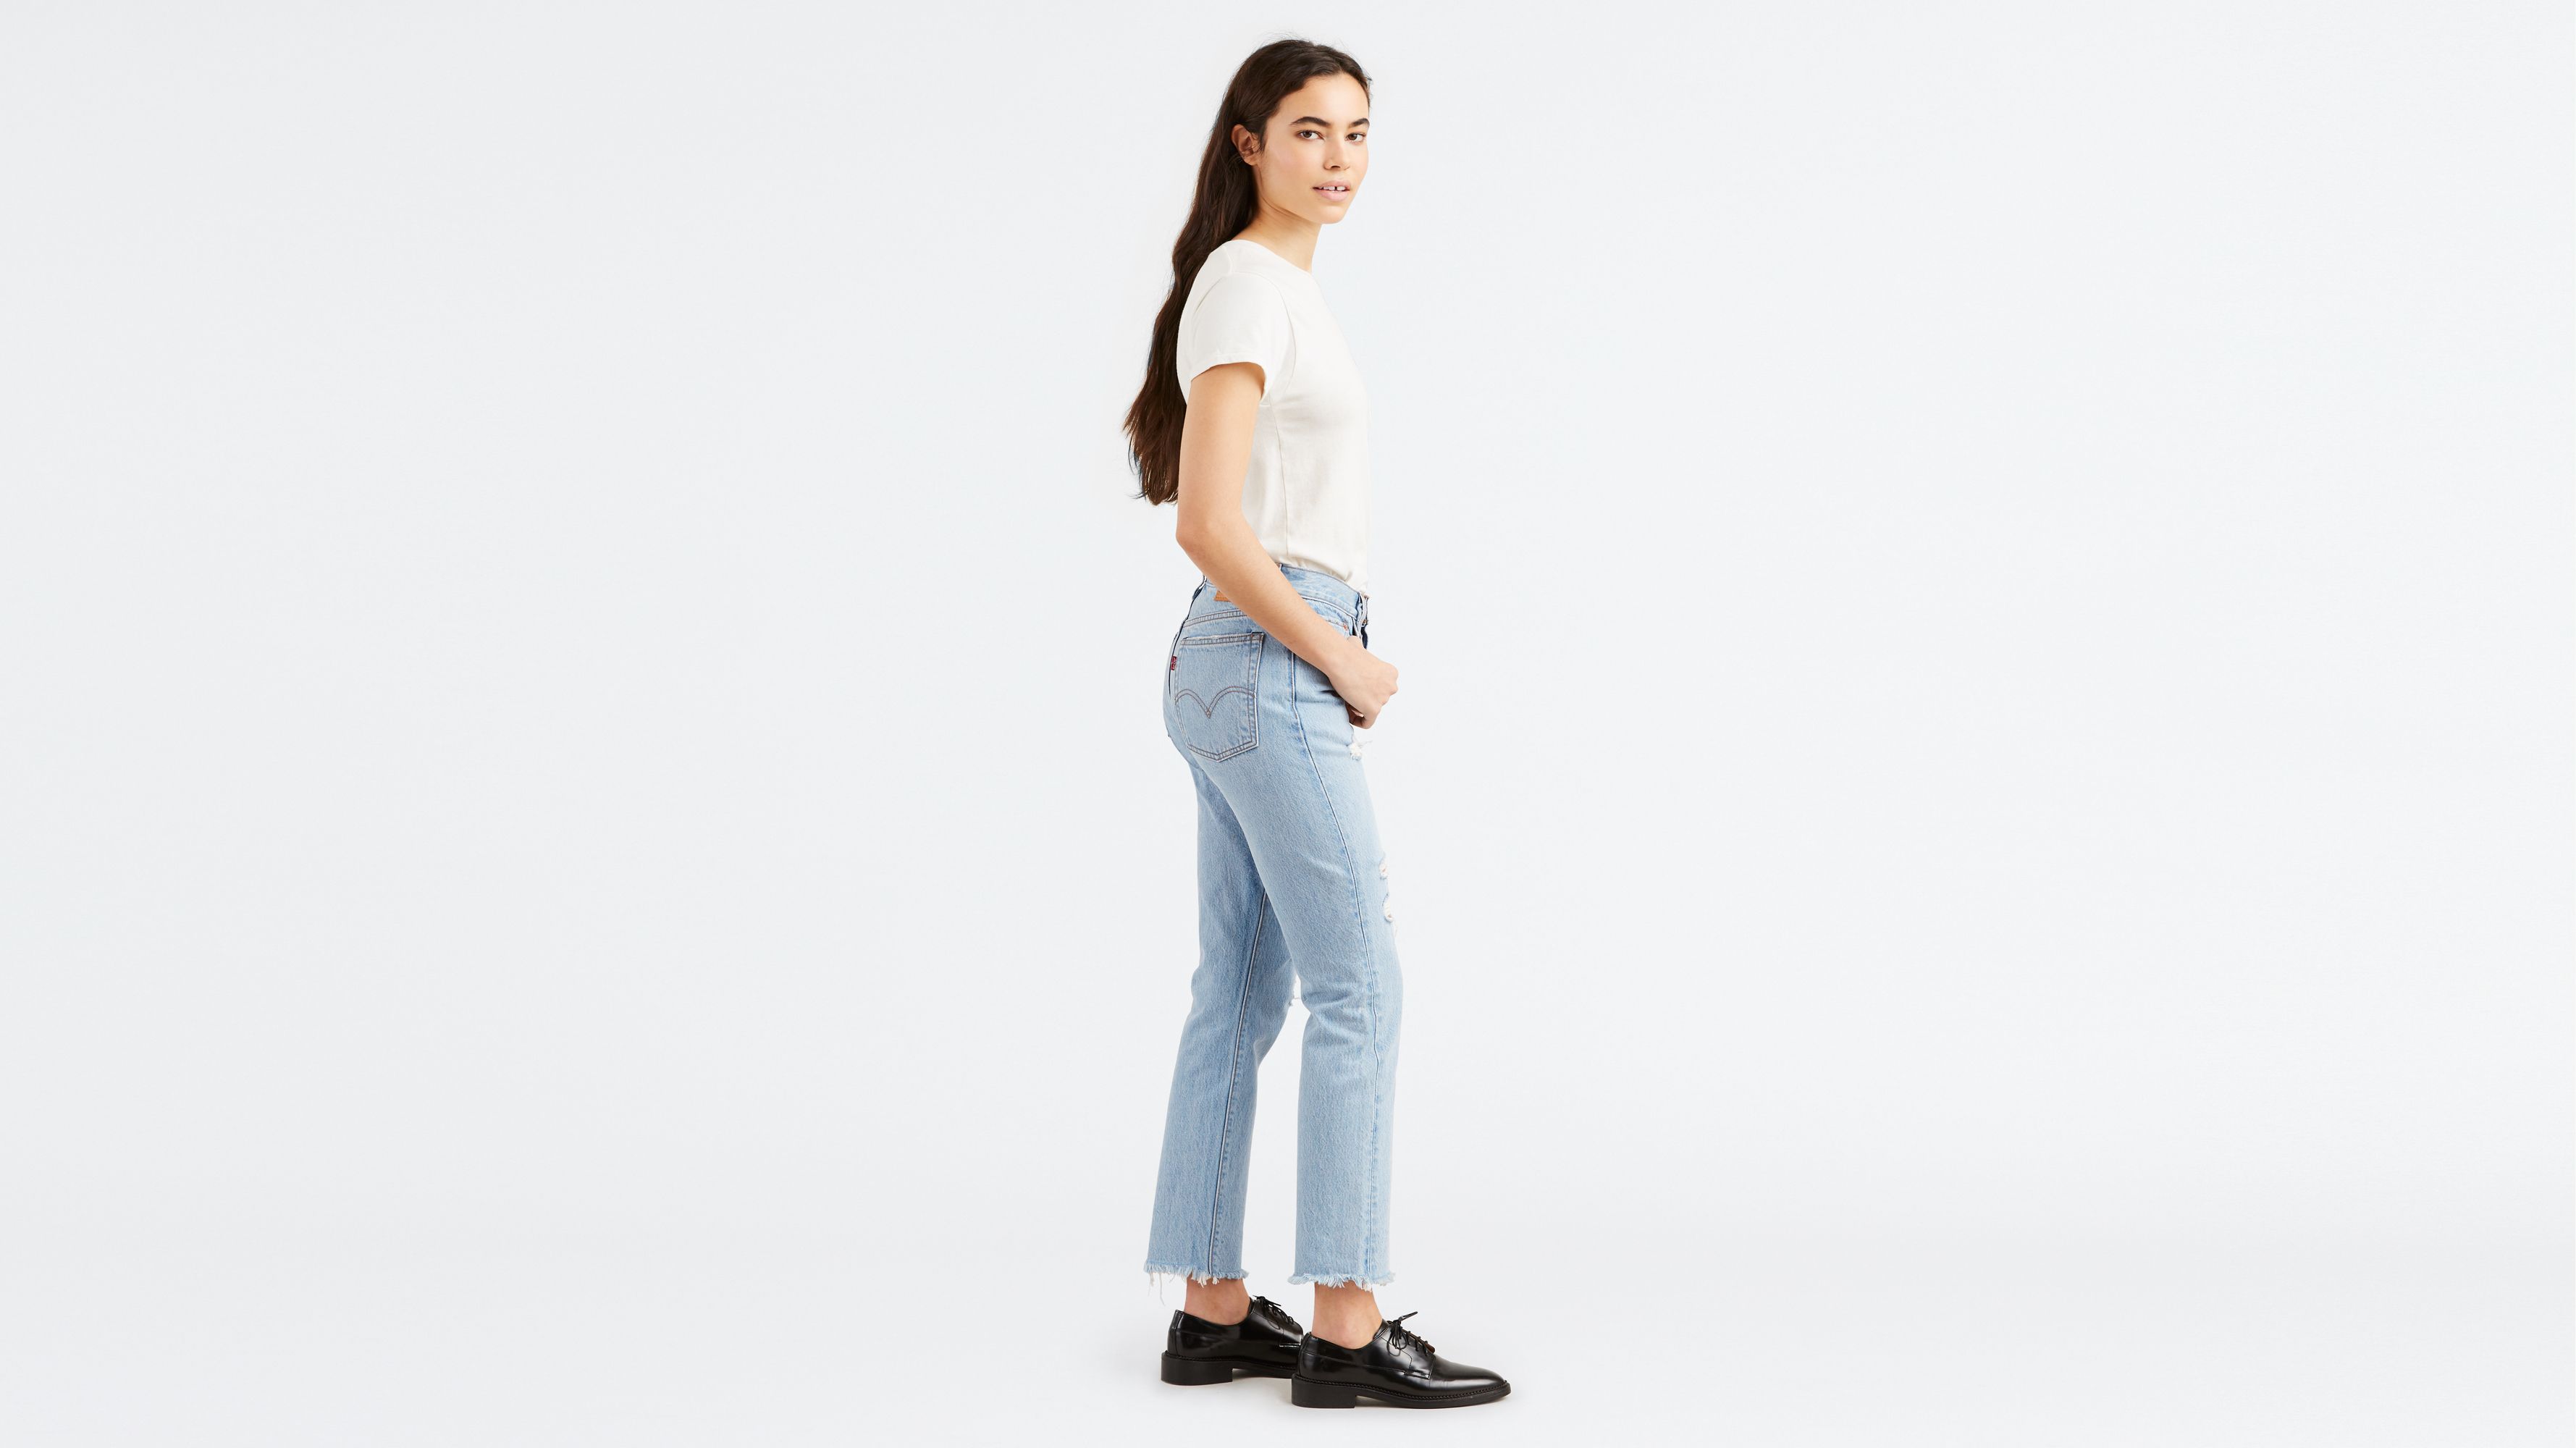 Wedgie Fit Ankle Women's Jeans - Light Wash | Levi's® US